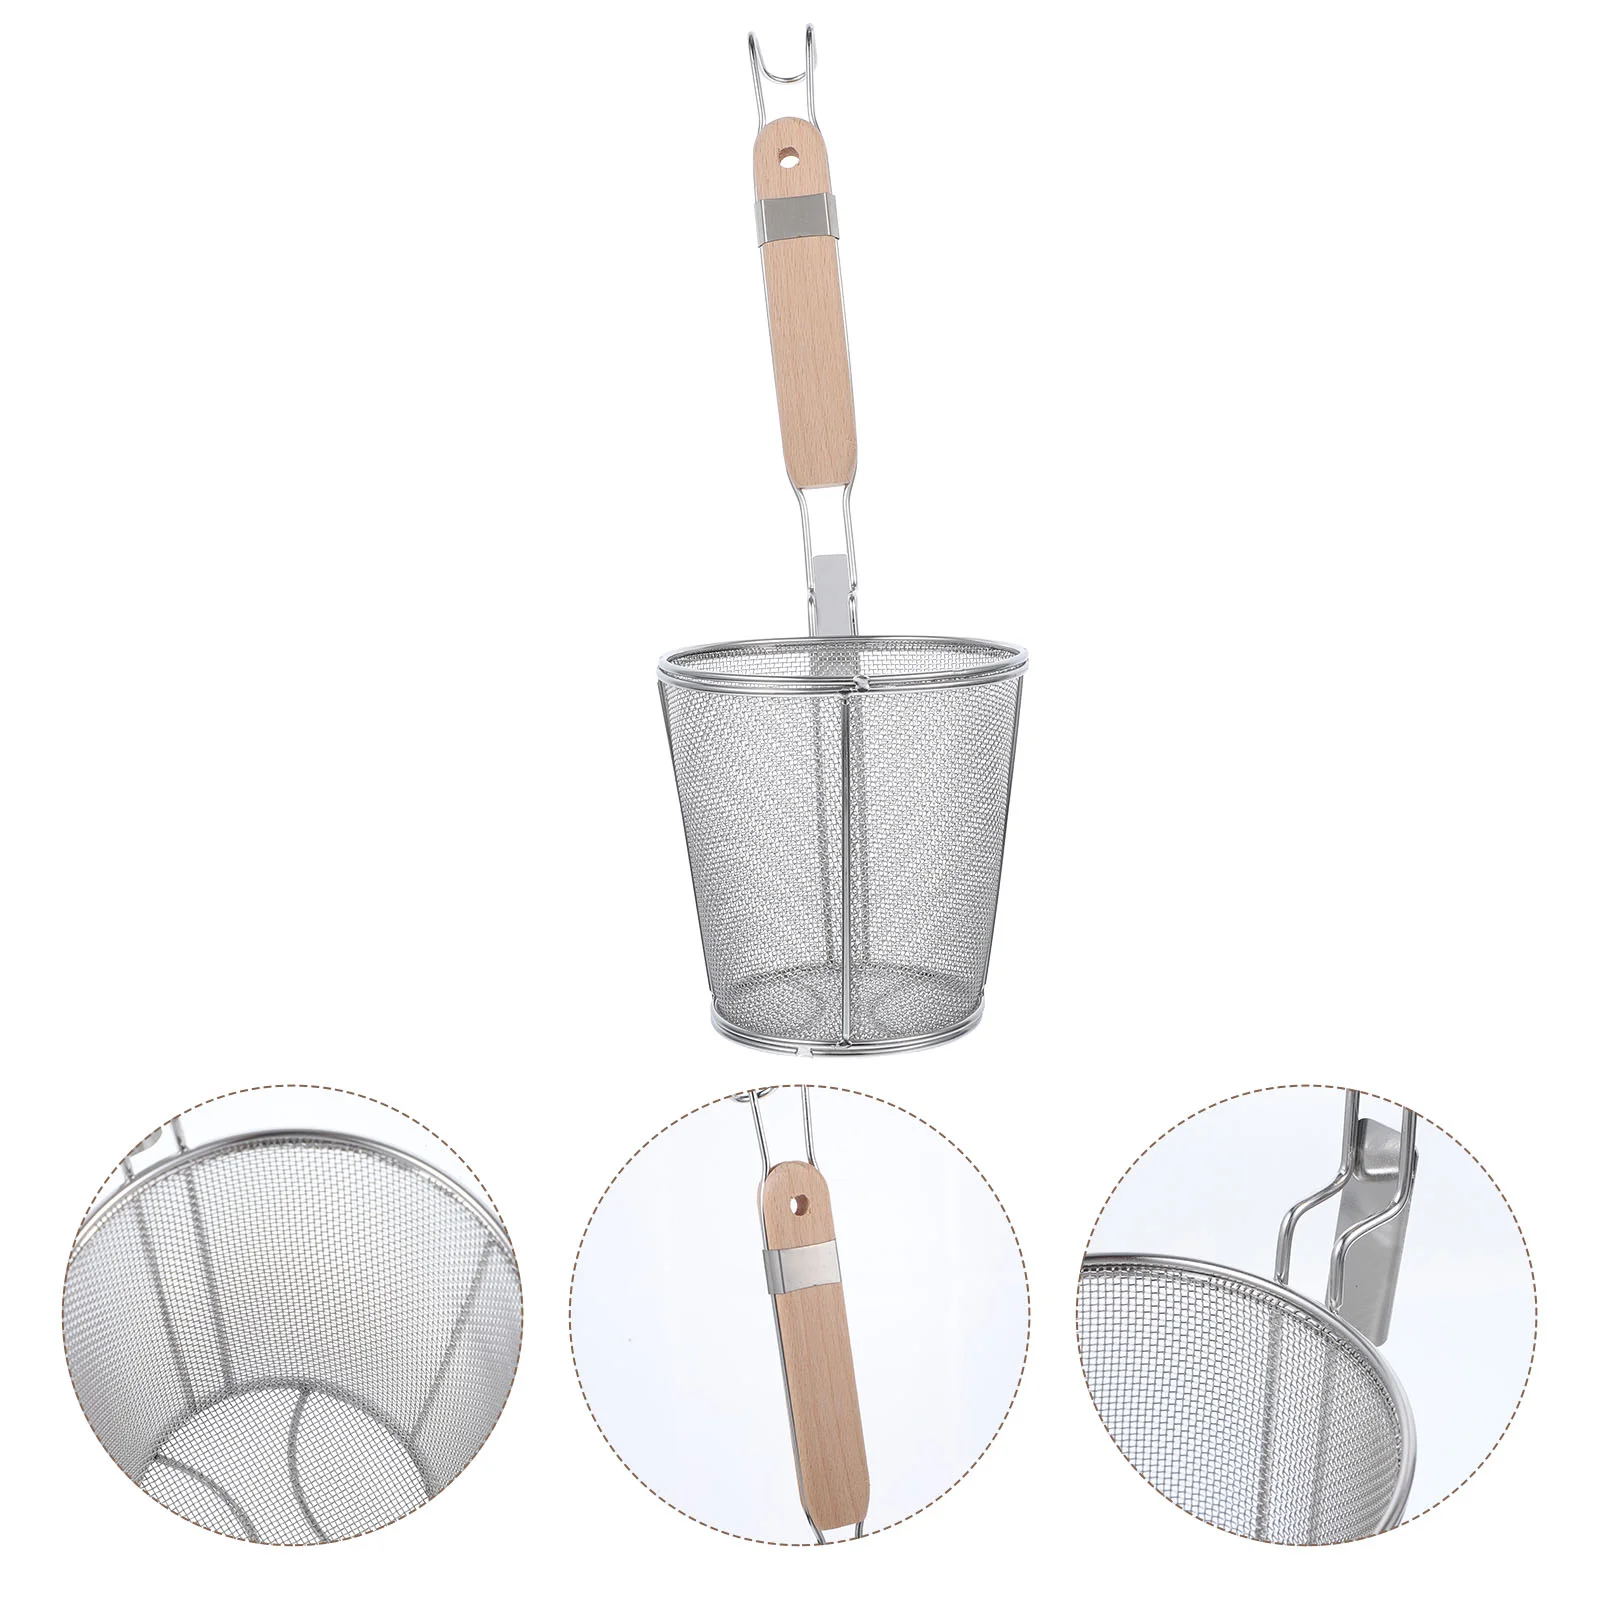 

Stainless Steel Colander Wire Mesh Durable Spoon Hot Vegetable Basket Kitchen Gadget Handheld Sifter Noodle Straining Strainer